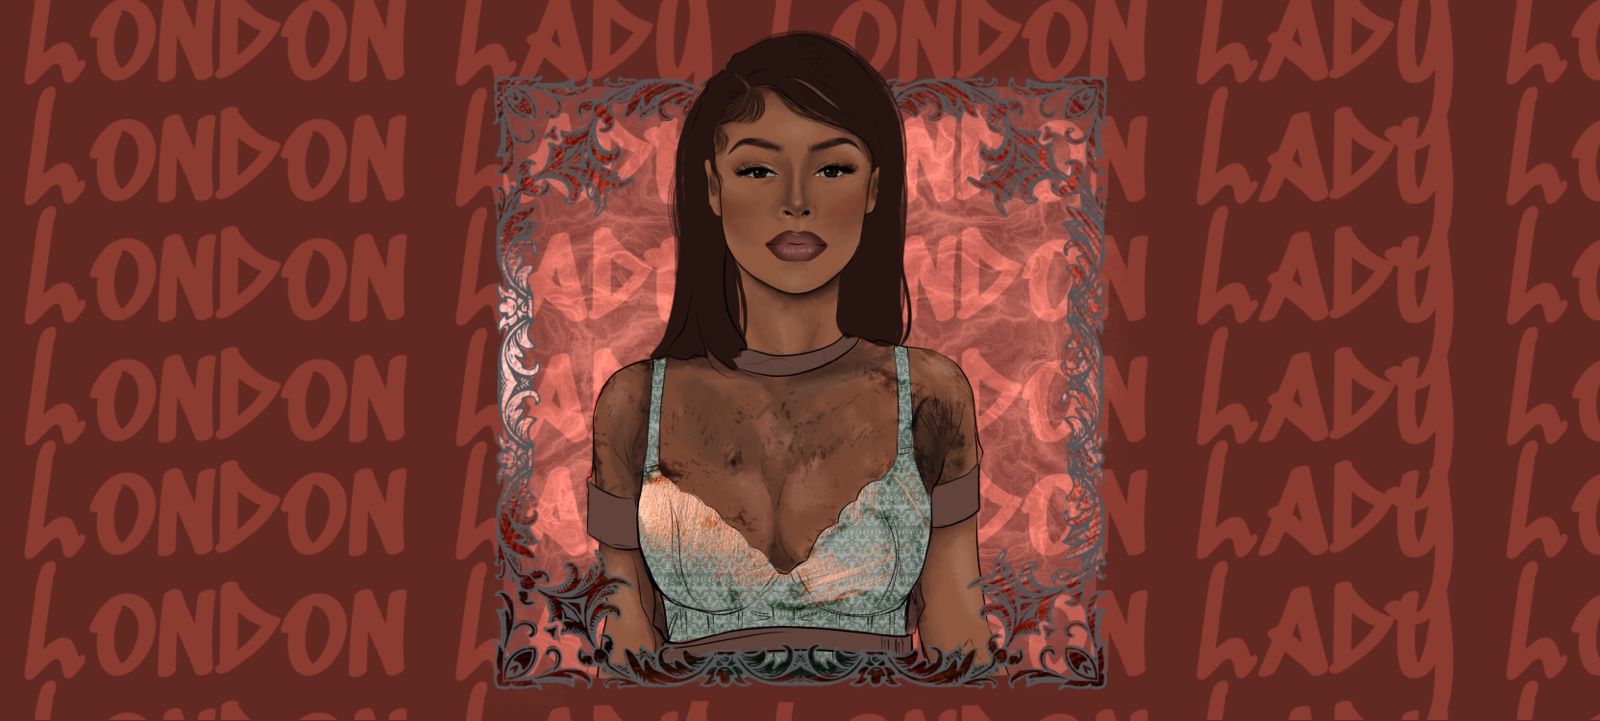 Lady London - 365 Fe*male MCs